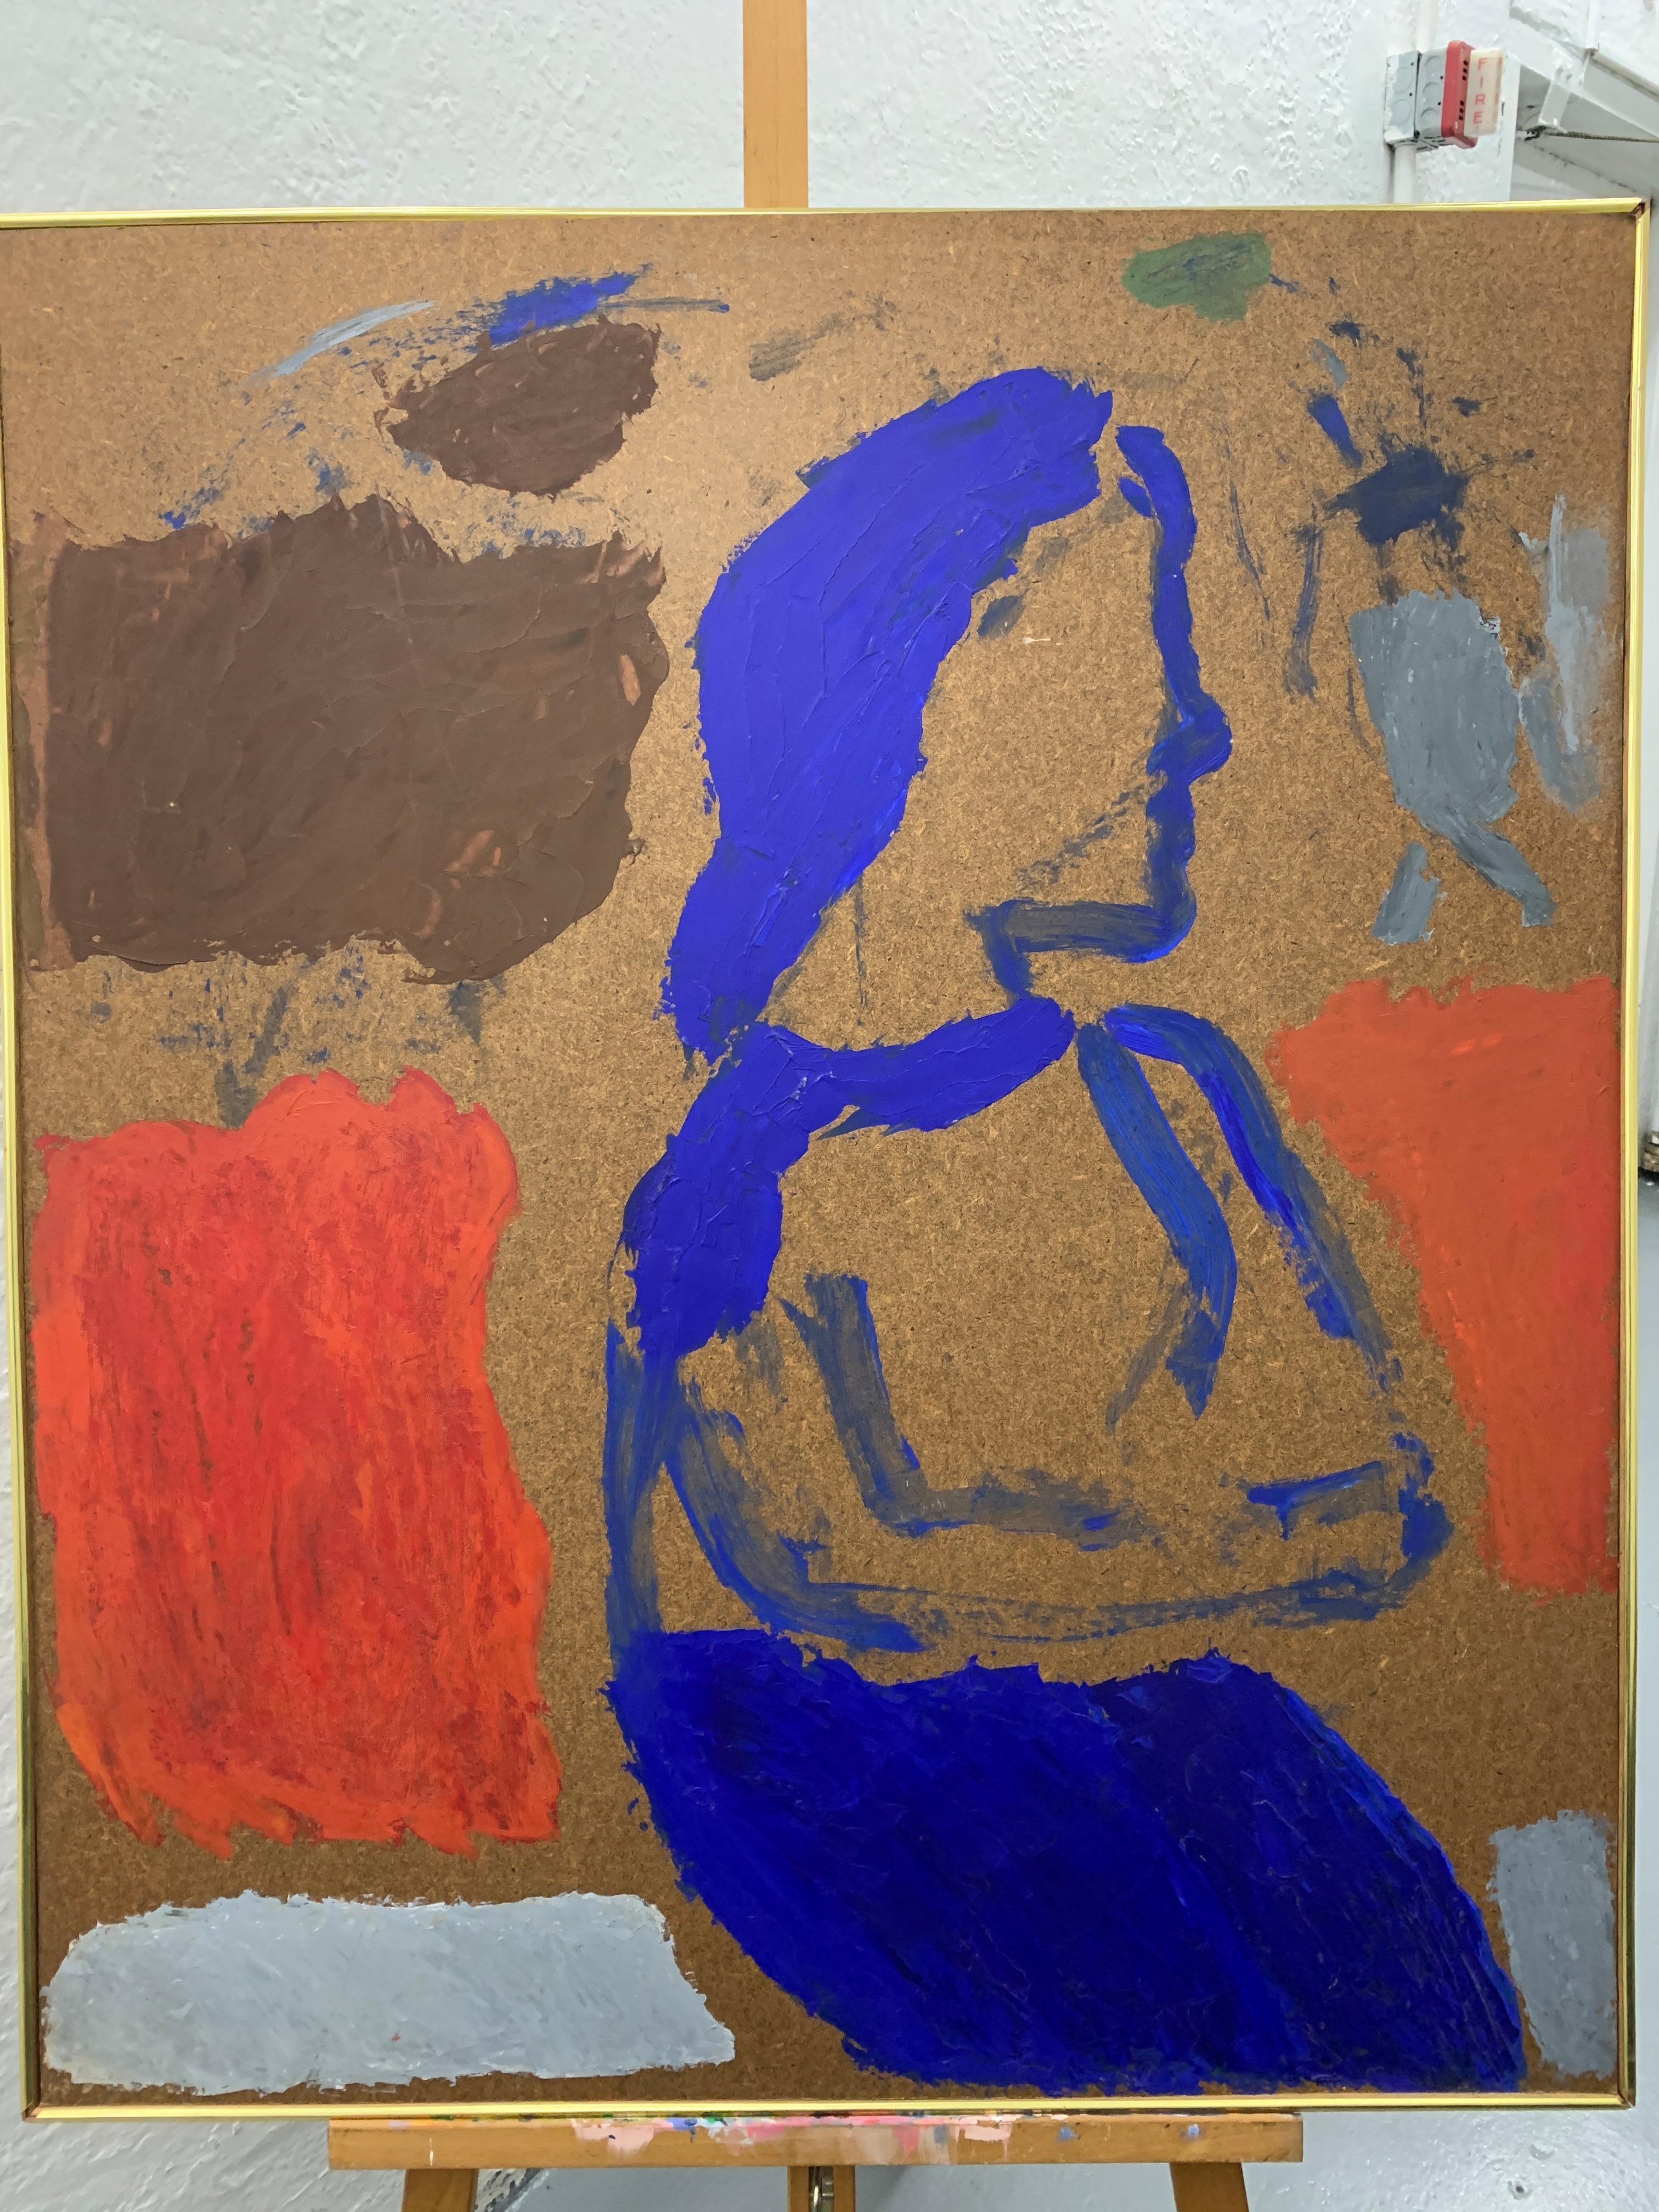 Artiste expressionniste abstraite new-yorkaise du milieu du siècle dernier, « Armoiries croisées » - Expressionnisme abstrait Painting par Sylvia Rutkoff